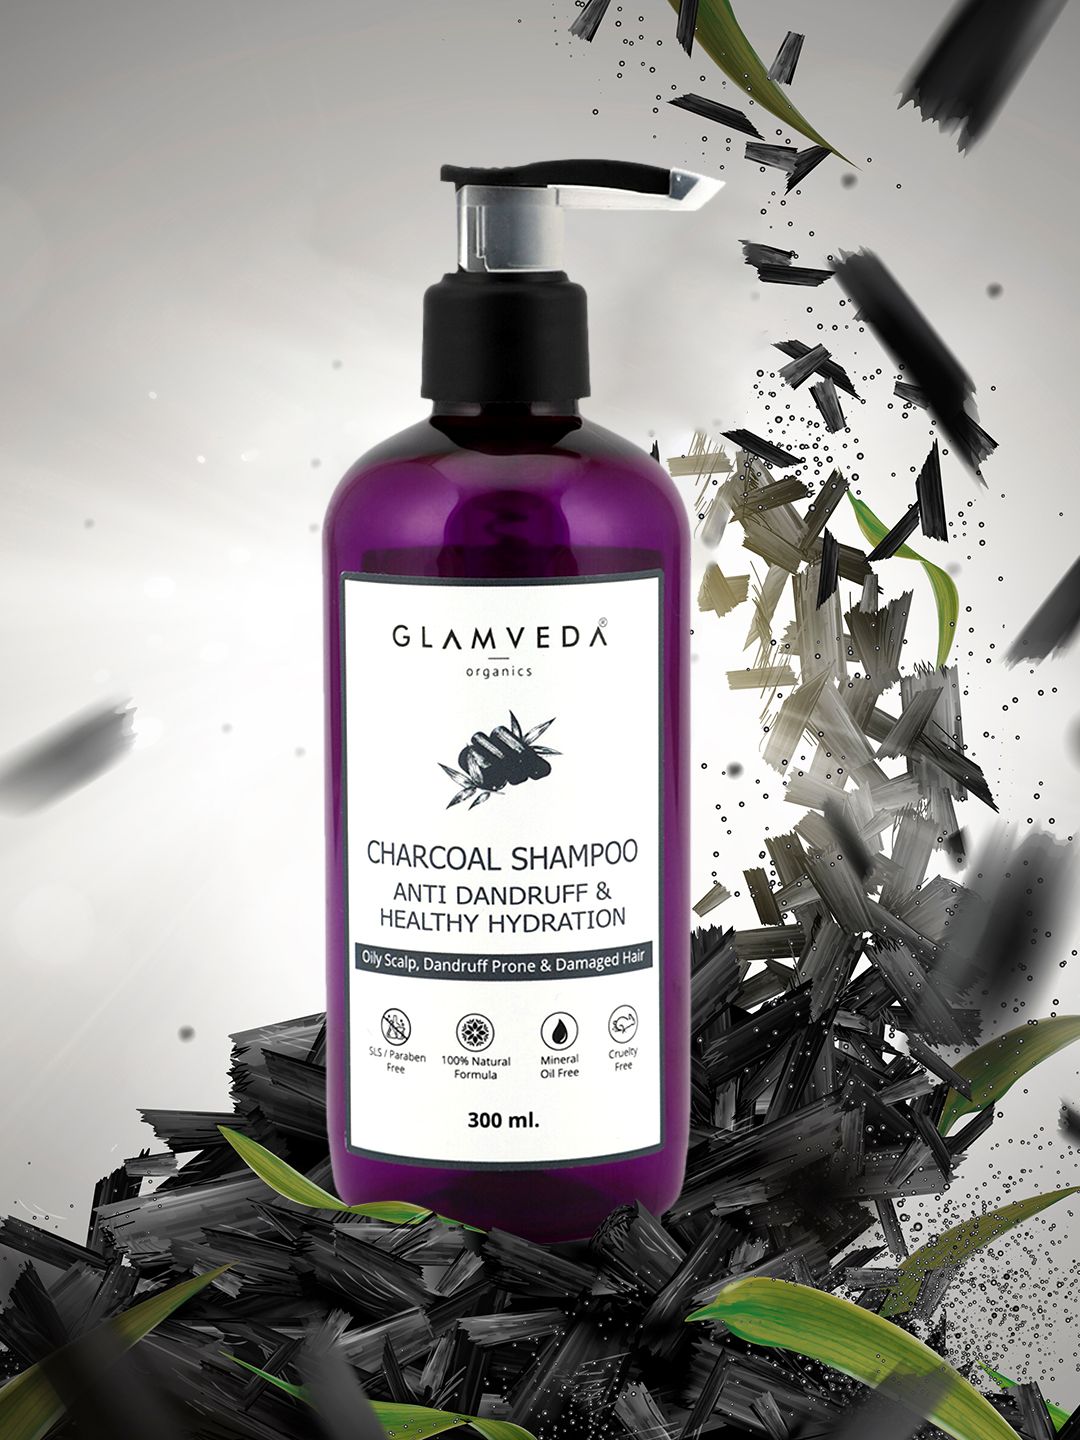 Glamvedas Anti Dandruff & Healthy Hydration Charcoal Shampoo 300 ml Price in India